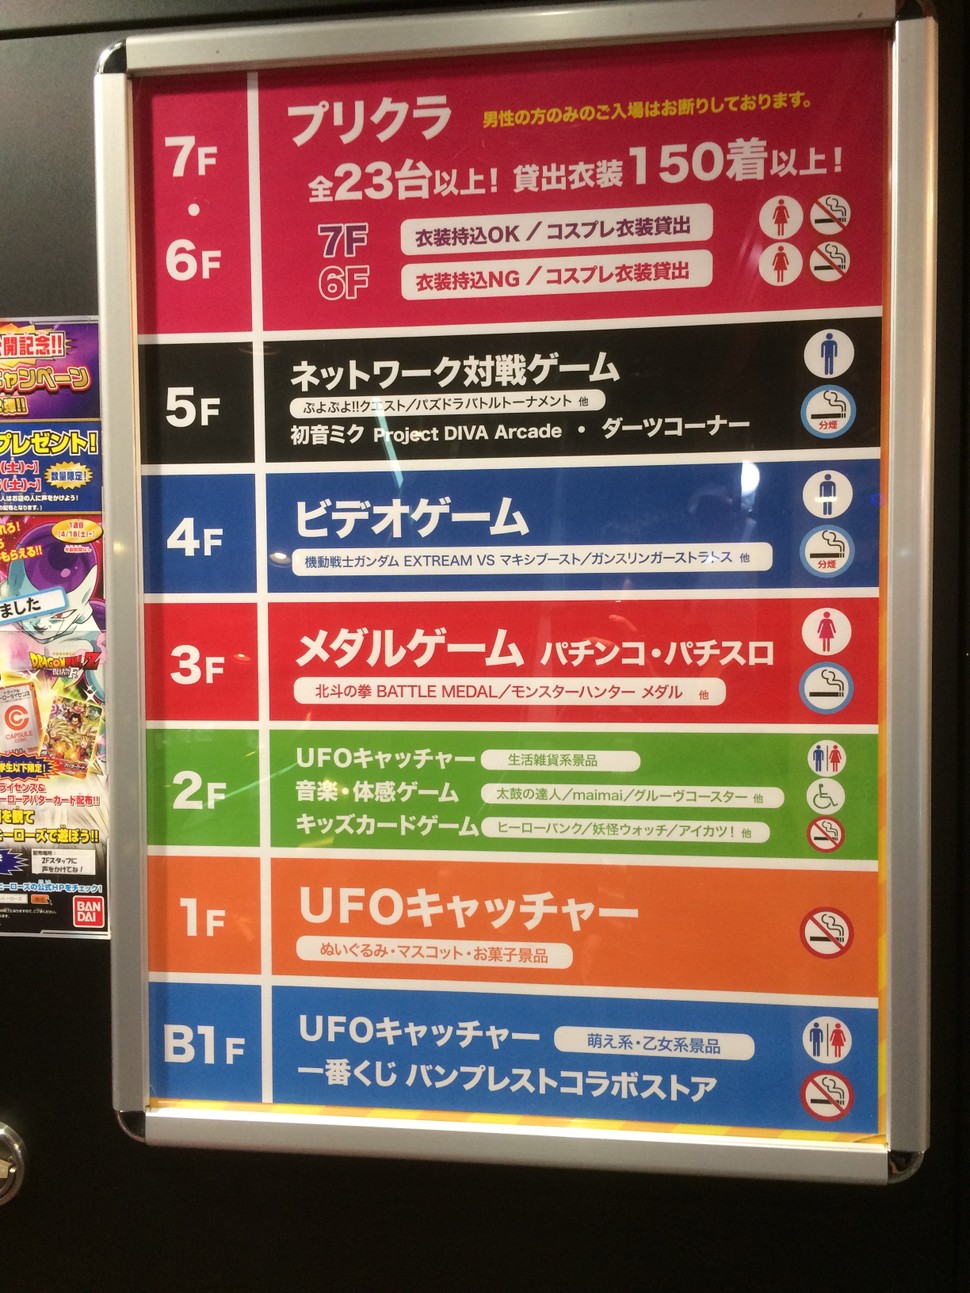 Sega Ikebukuro Sightseeing Information Of Gigo Highlight Reputation Access Etc Playlife Play Life